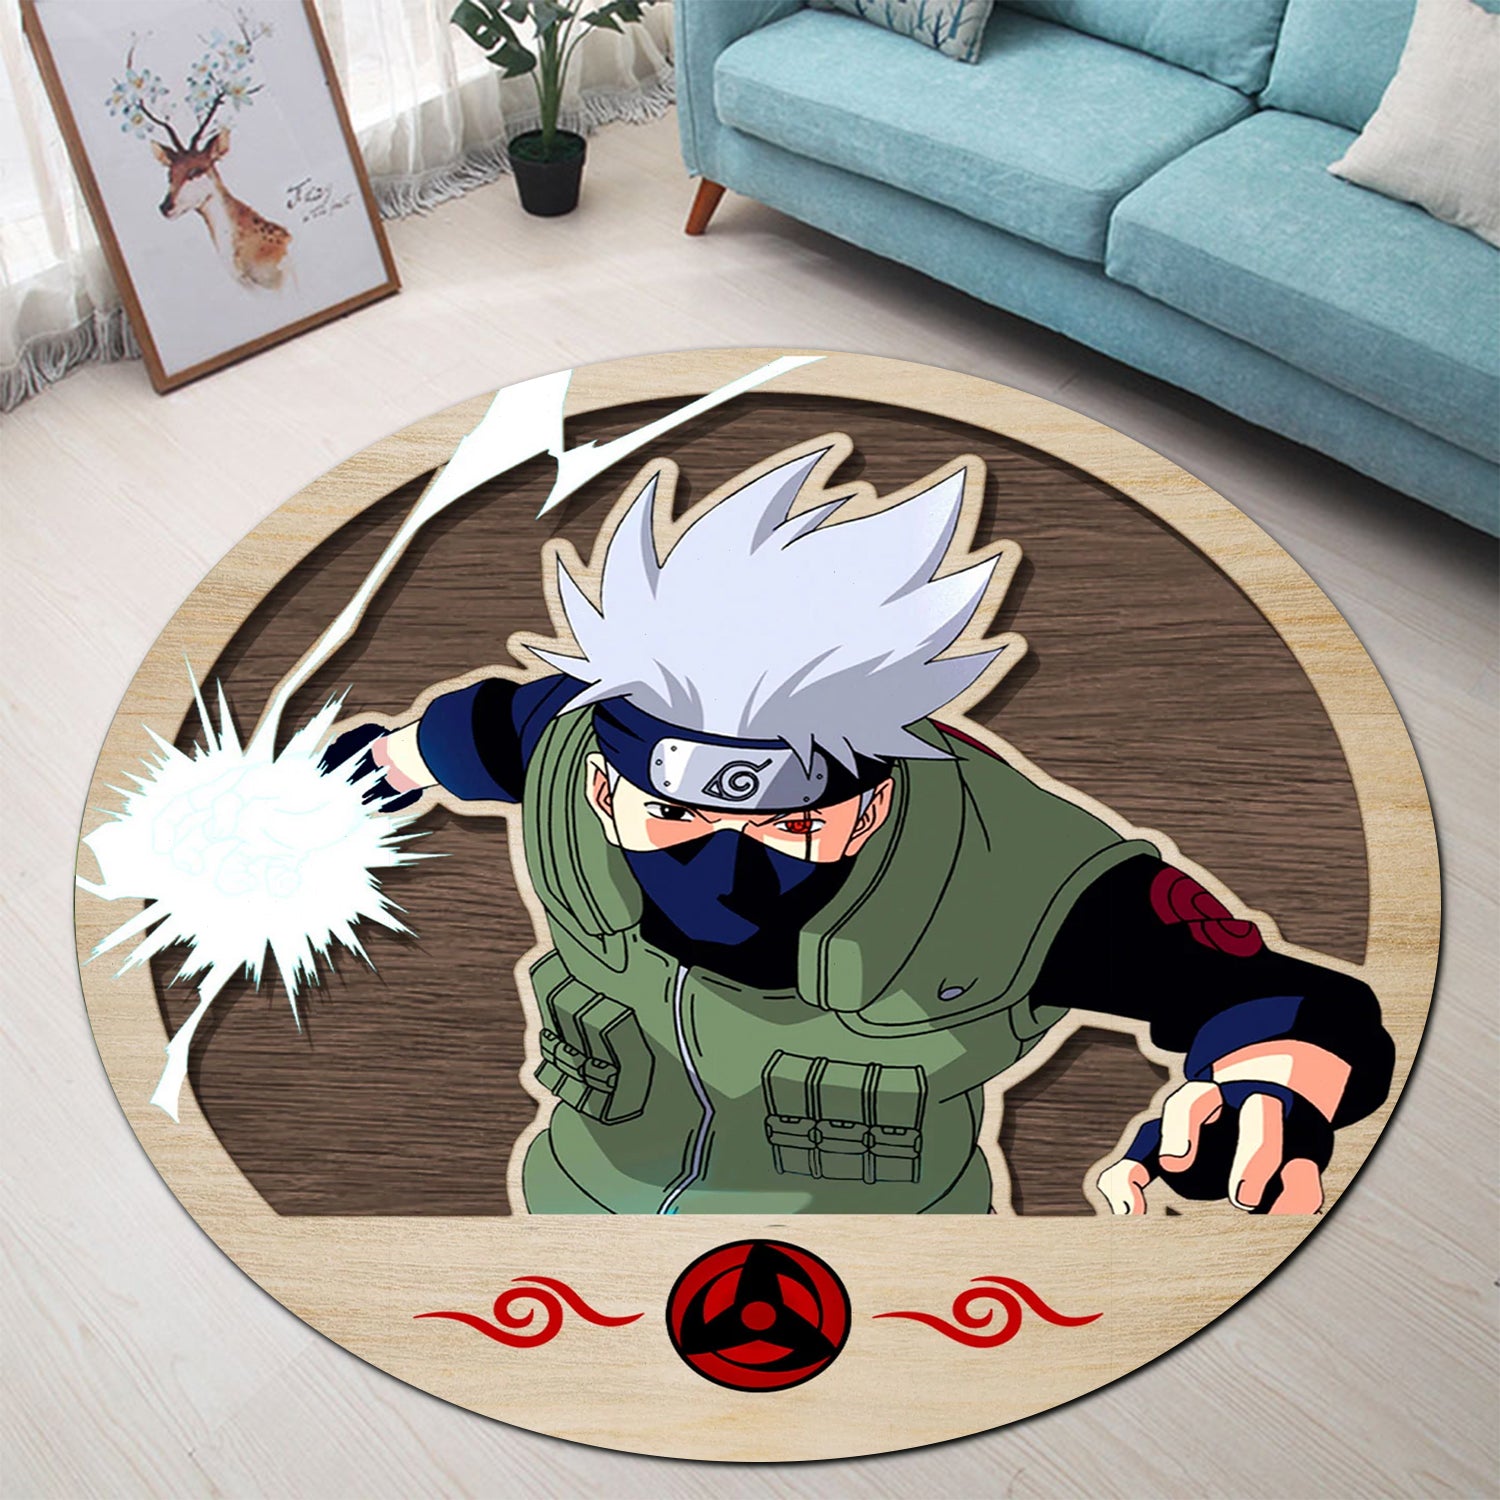 Naruto Hatake Kakashi Round Carpet Rug Bedroom Livingroom Home Decor Nearkii